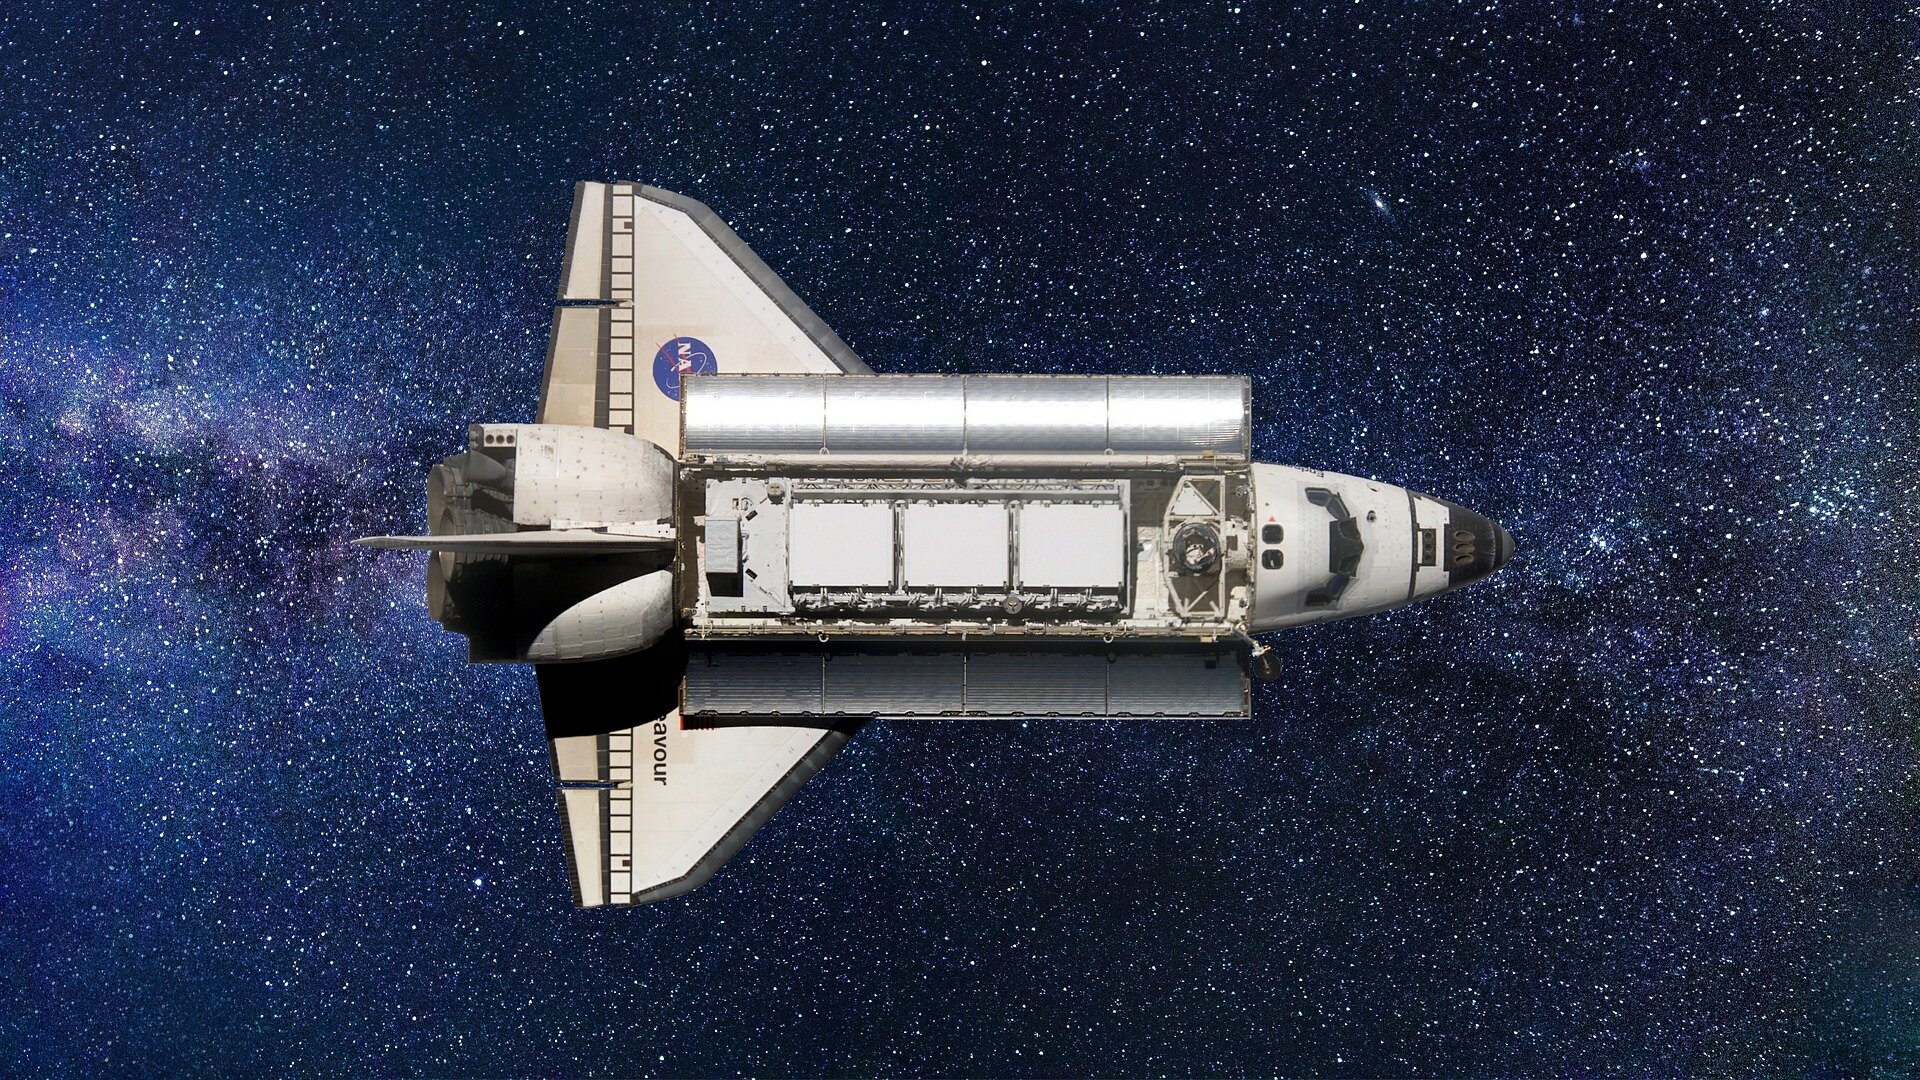 Last built-for-flight external tank lifted into place for space shuttle  Endeavour exhibit